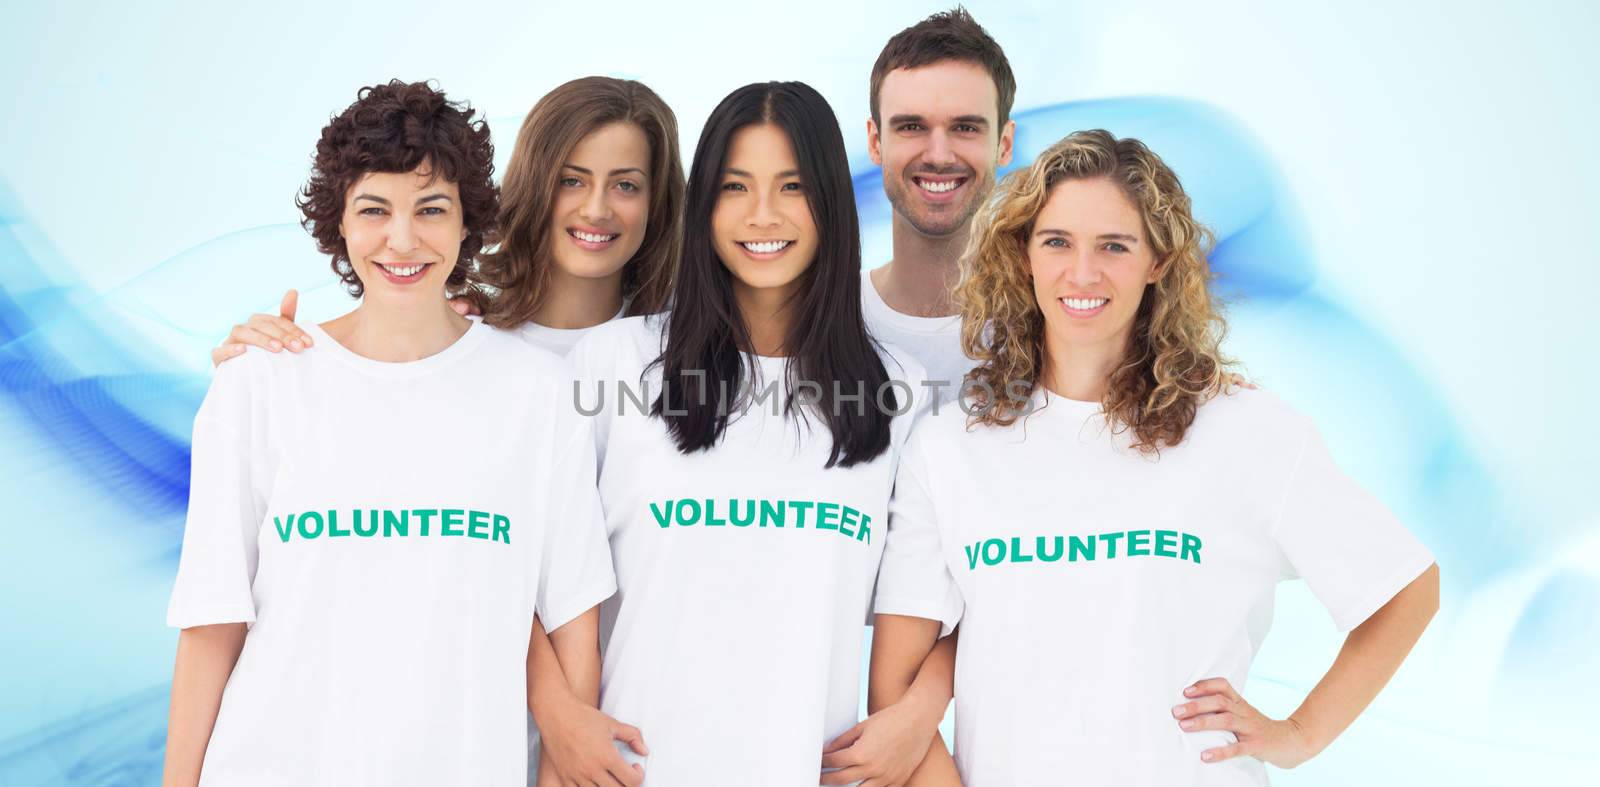 Group of people wearing volunteer tshirt against blue abstract design